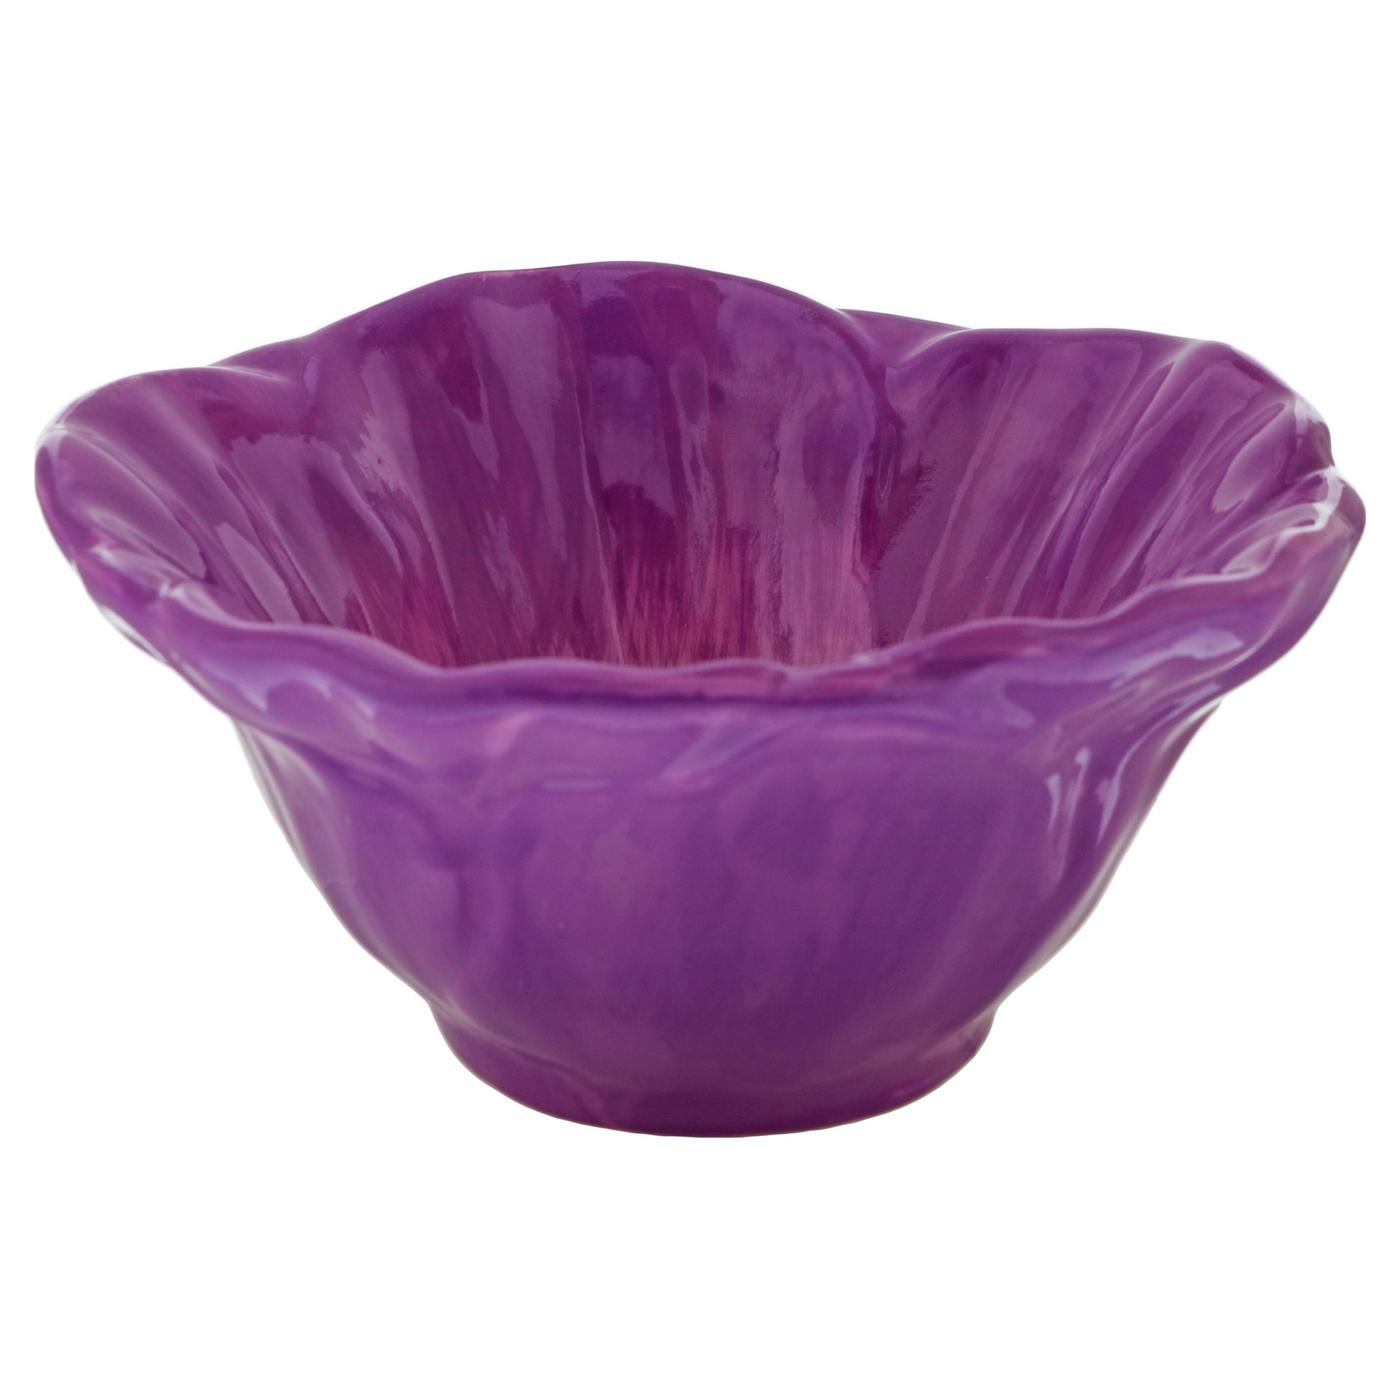 Haven & Key Ceramic Flower Bowl; image 2 of 4